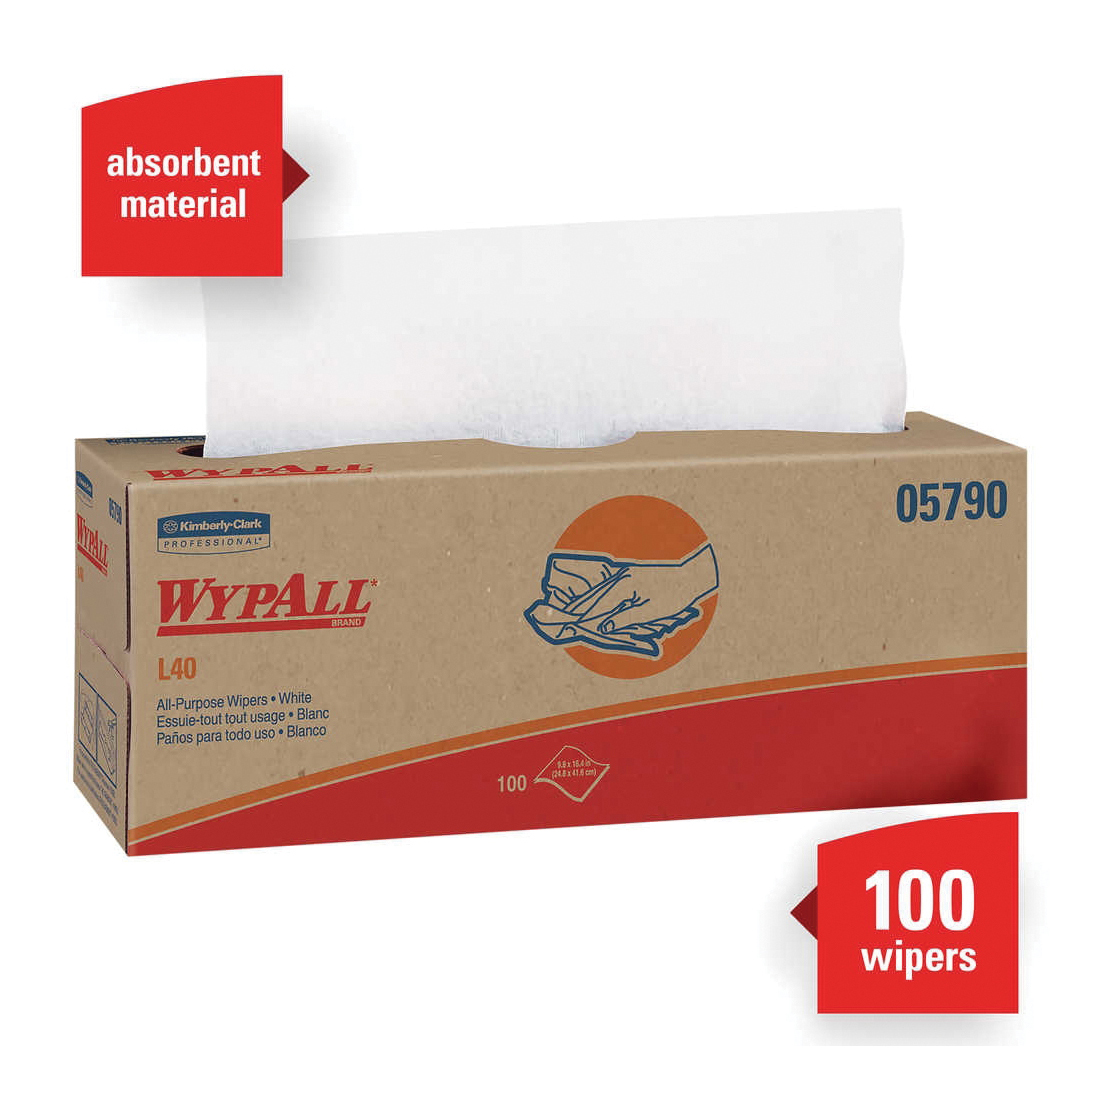 WYPALL® 05790 Wipe, Pop-Up Box